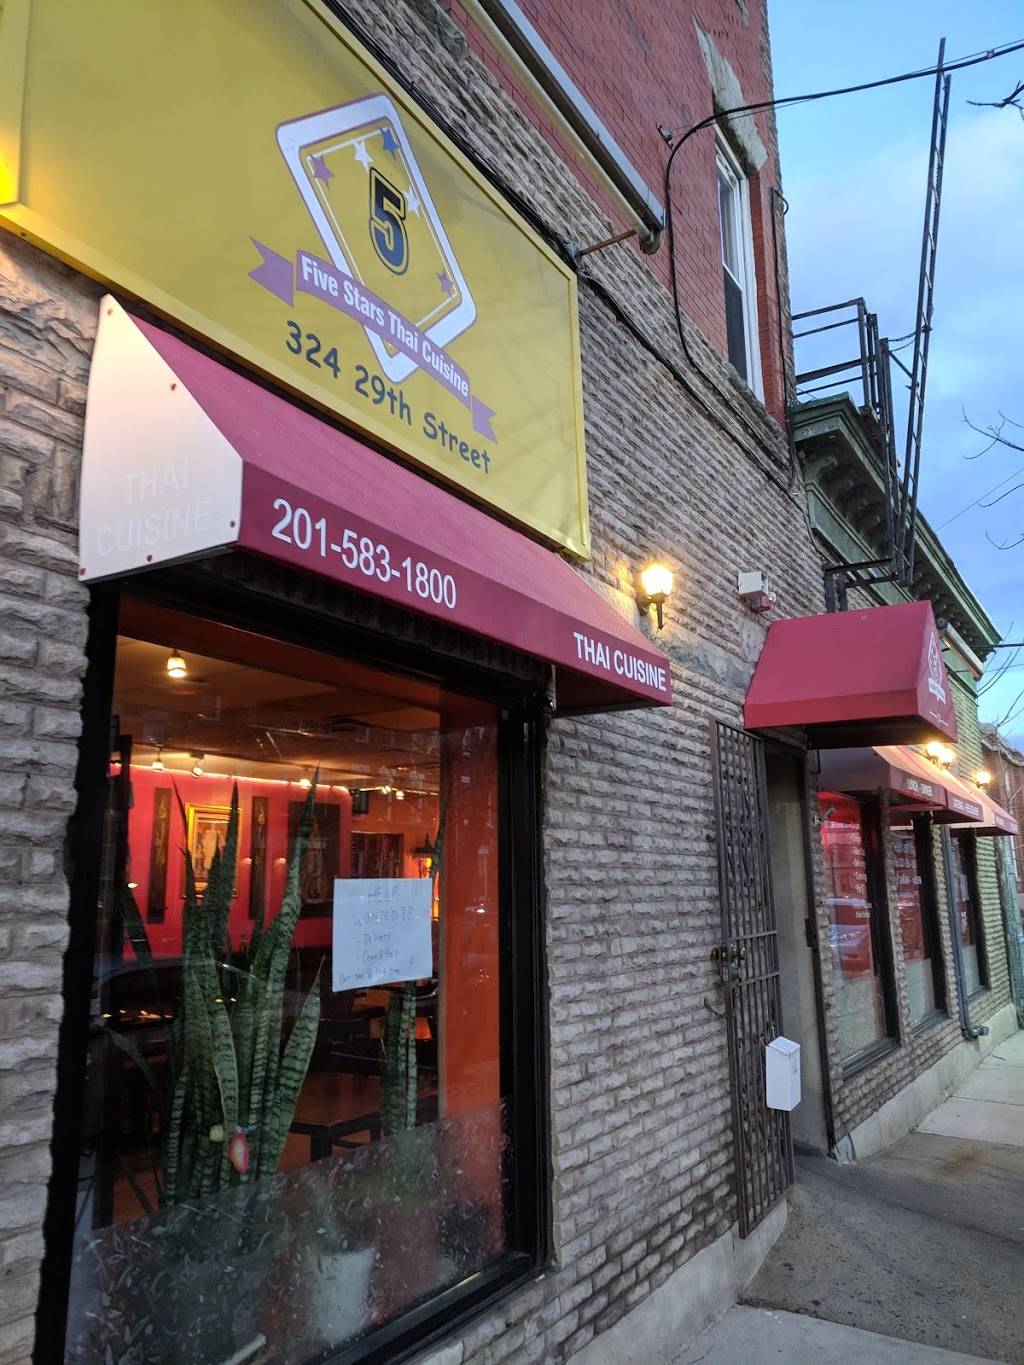 Five Stars Thai Cuisine | restaurant | 324 29th St, Union City, NJ 07087, USA | 2015831800 OR +1 201-583-1800